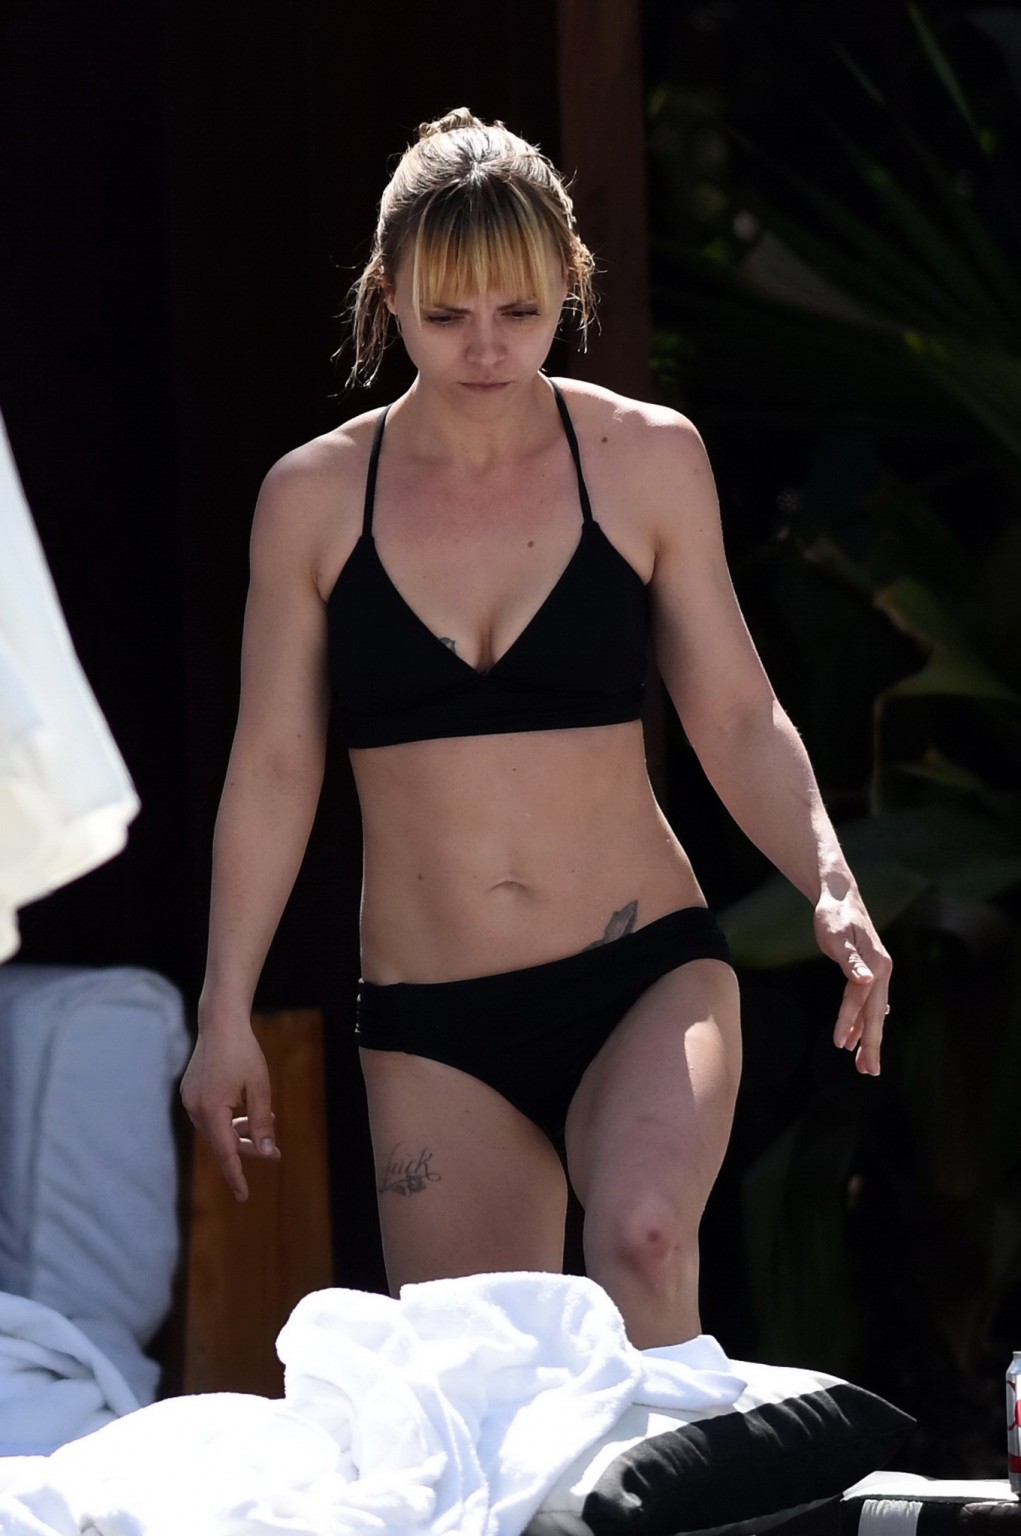 Christina Ricci shows off her hot bikini body poolside